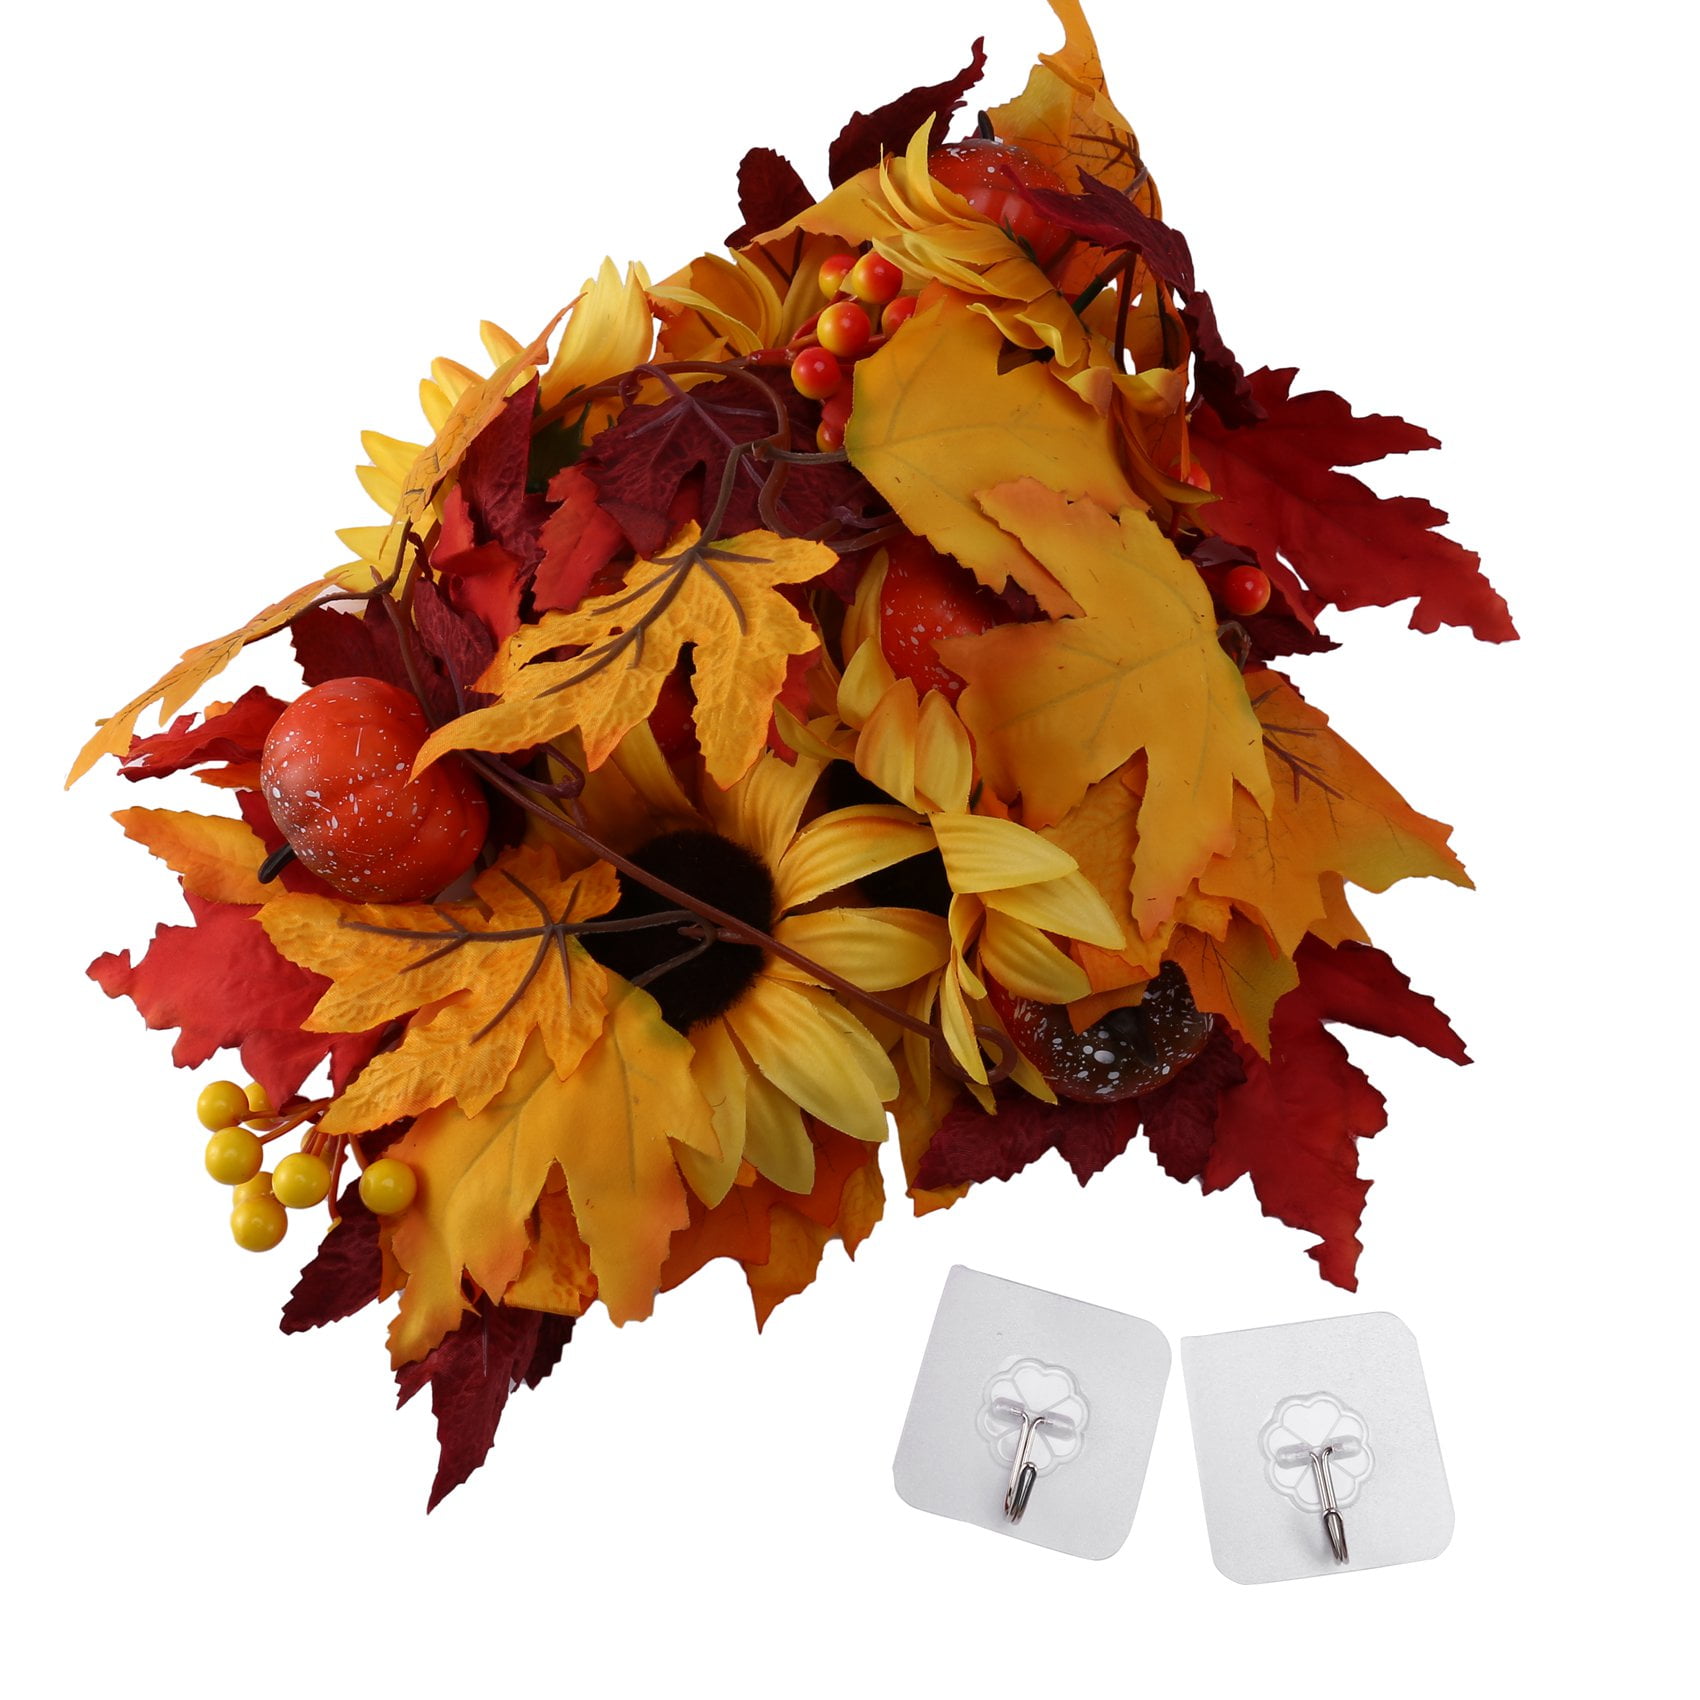 Details about   177cm Artificial Maple Leaf Berries Sunflower Pumpkin Garland Hanging Vine Y3F1 